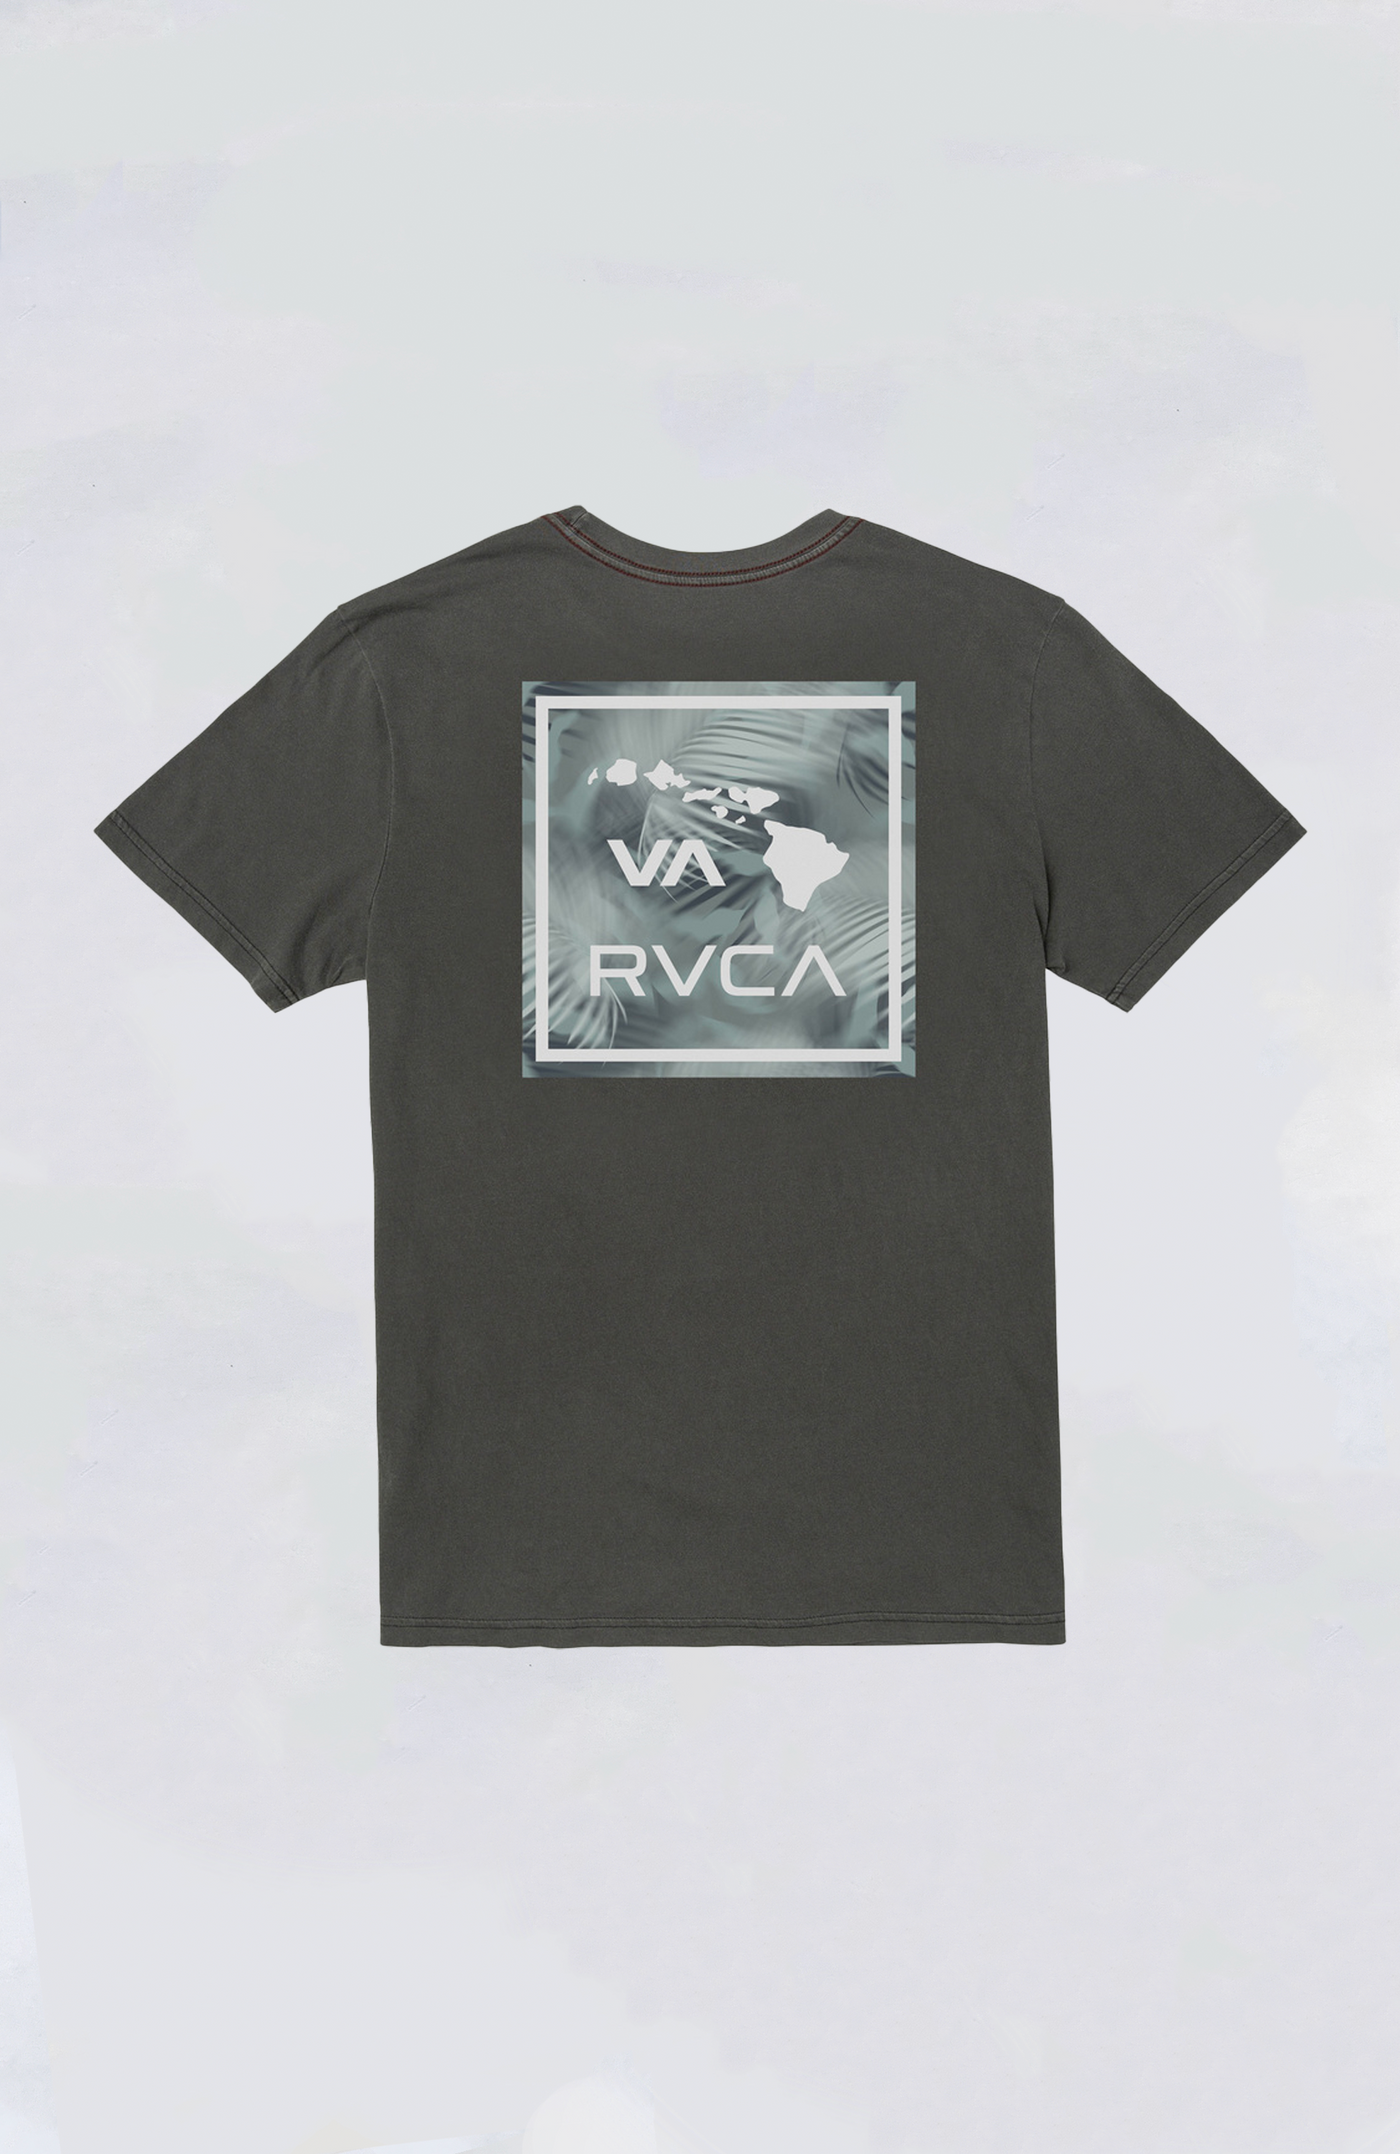 RVCA - VA ATW Spray Palm Tee